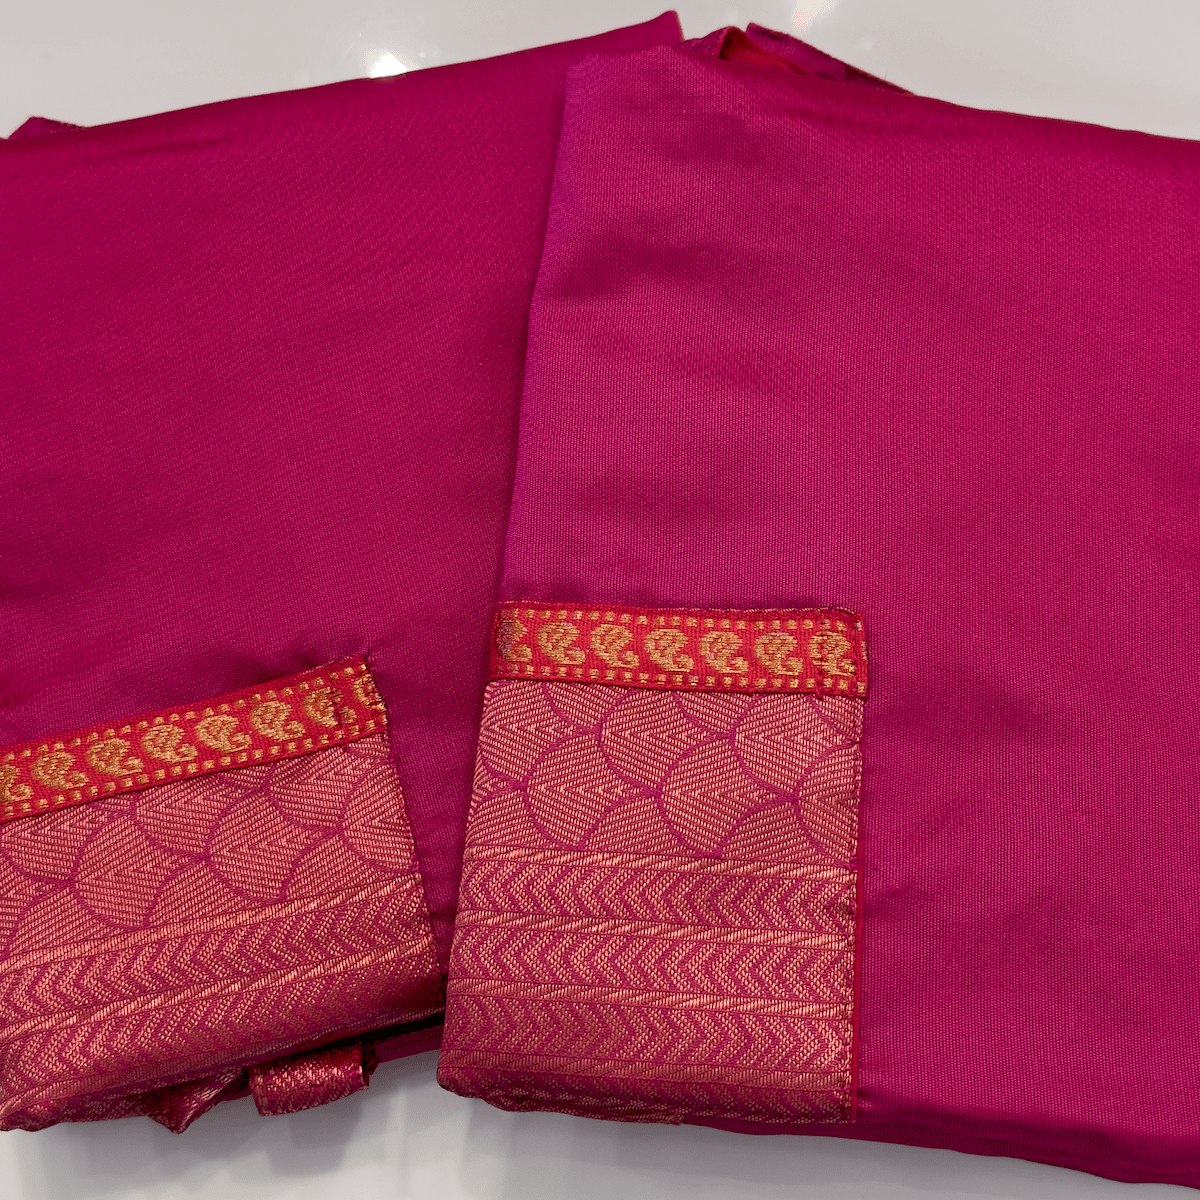 Cool &amp; Casual Handmade Sari Aprons-Teal Floral with Gold Trim 